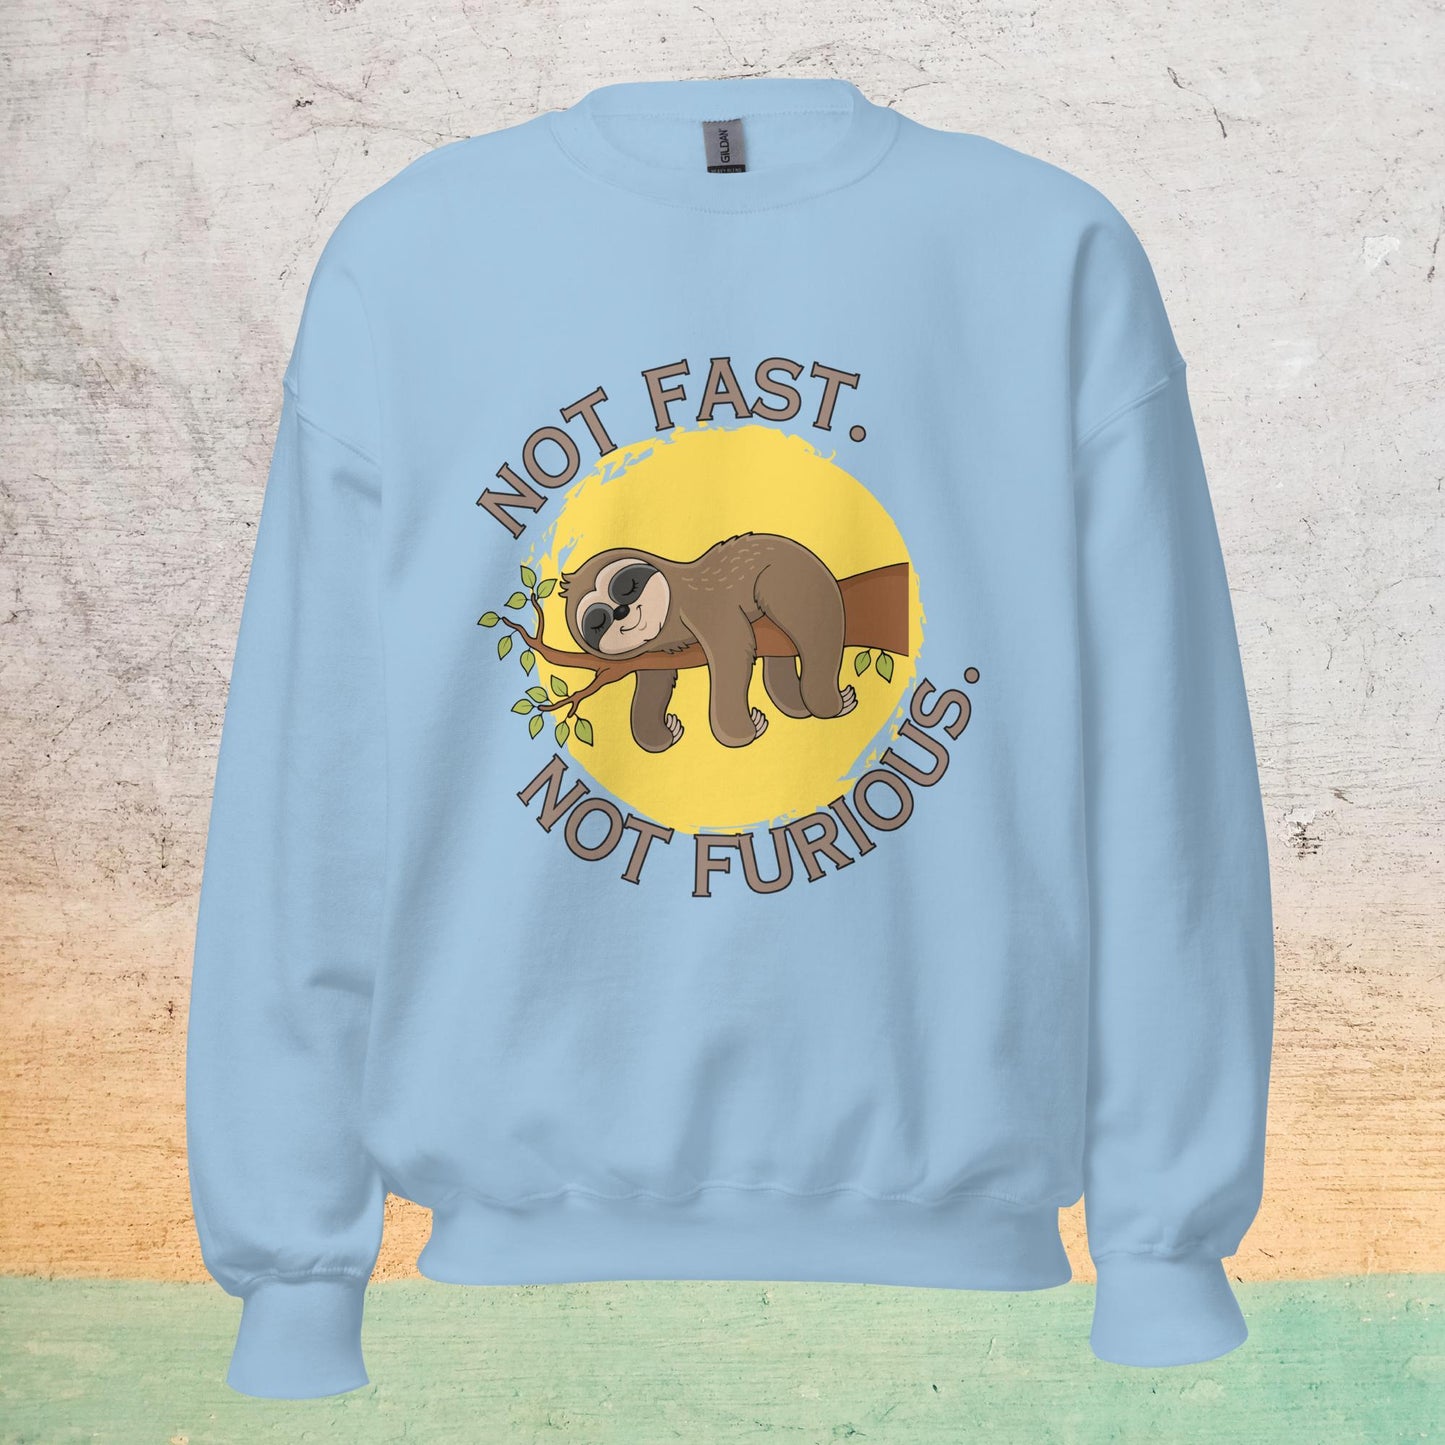 Essential Crew Neck Sweatshirt - Not Fast Not Furious